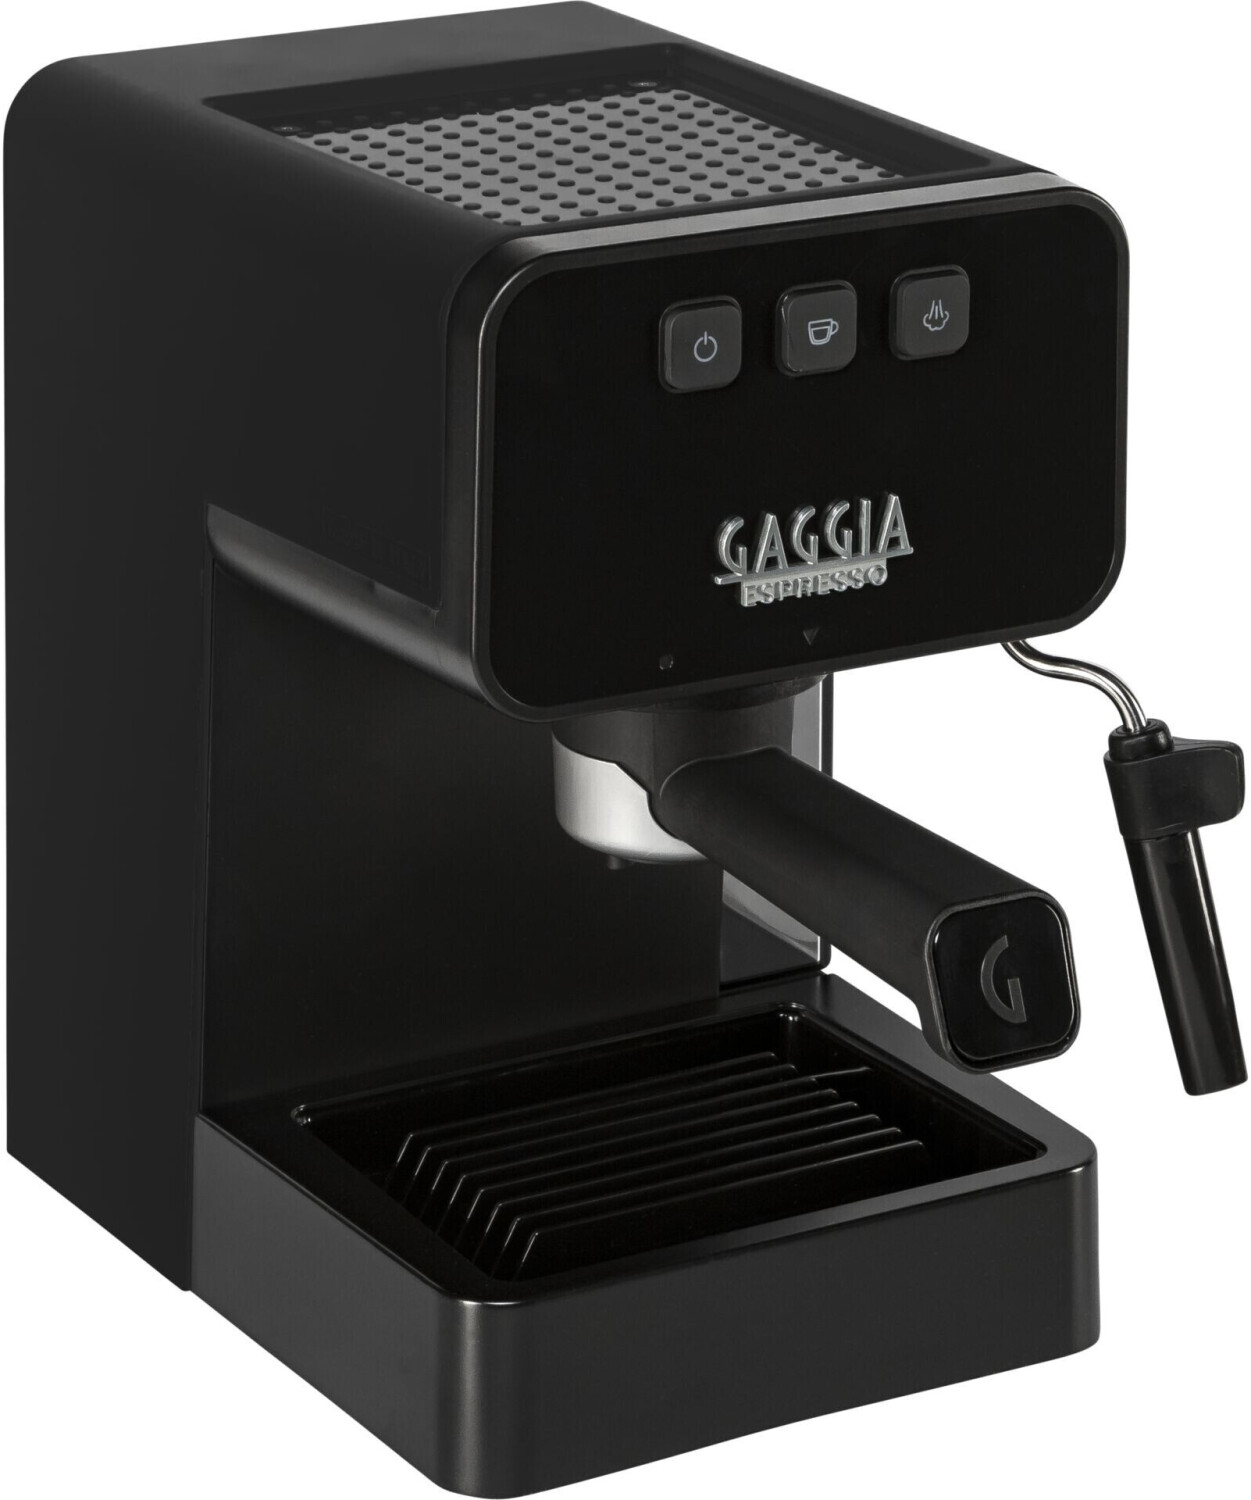 Gaggia Espresso Deluxe EG2111/01 Black stone ab 145,99 €